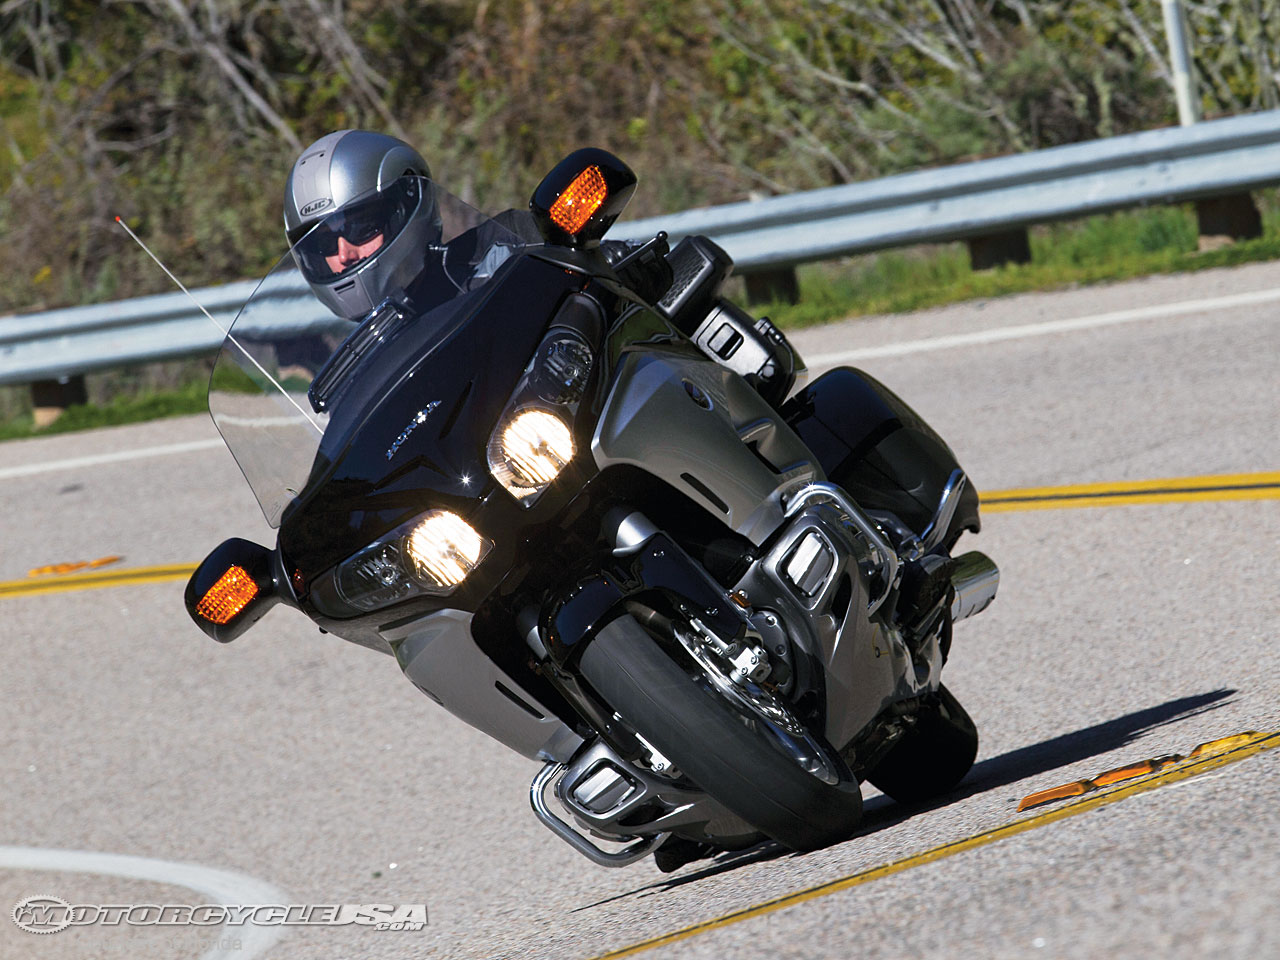 2012款本田Gold Wing 1800 Audio/Comfort摩托车图片3